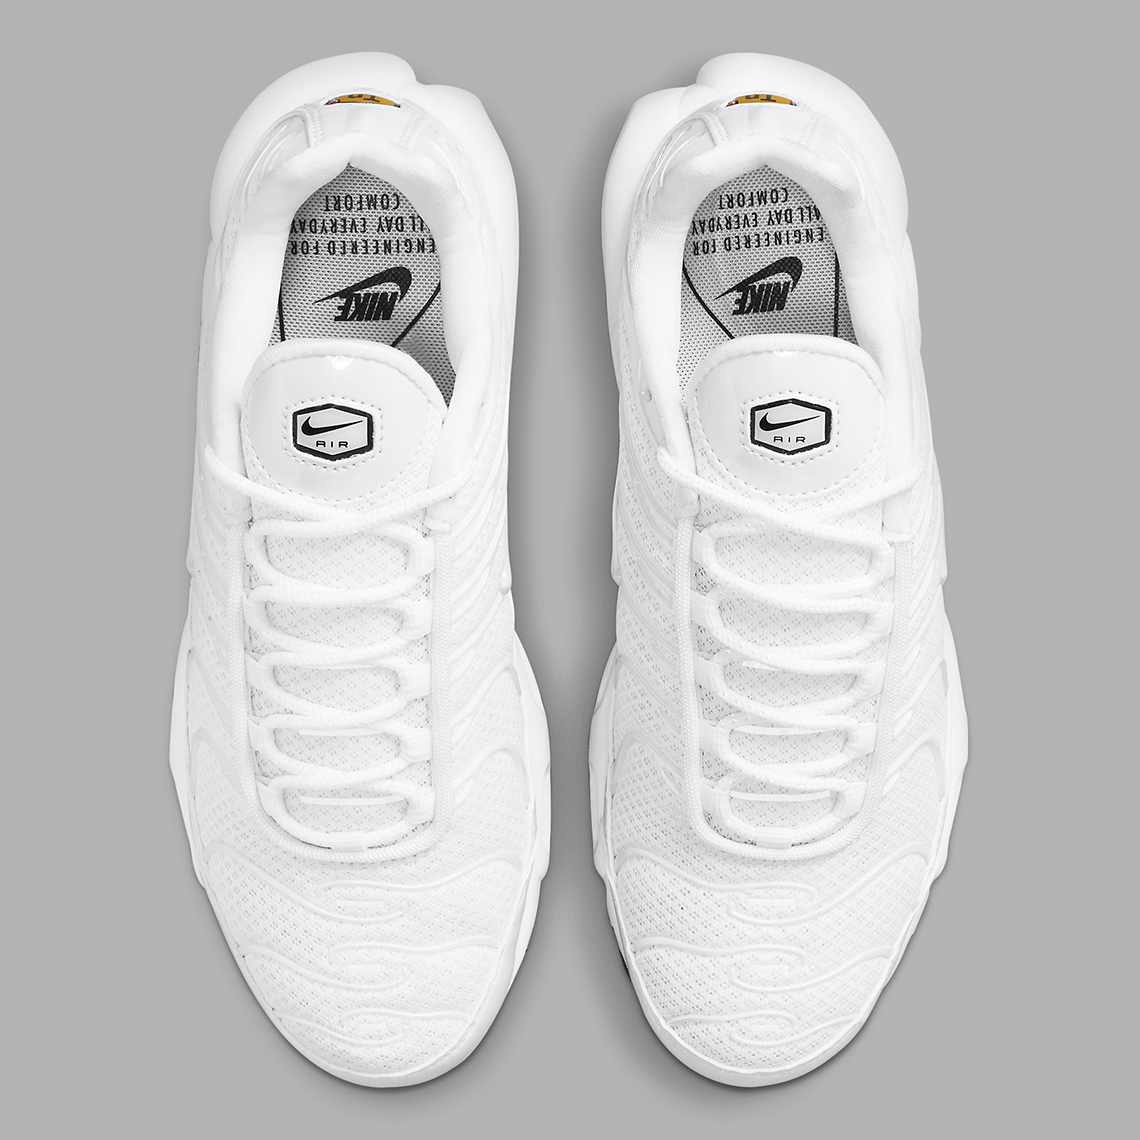 Nike Air Max Plus Triple White 848891 100 3